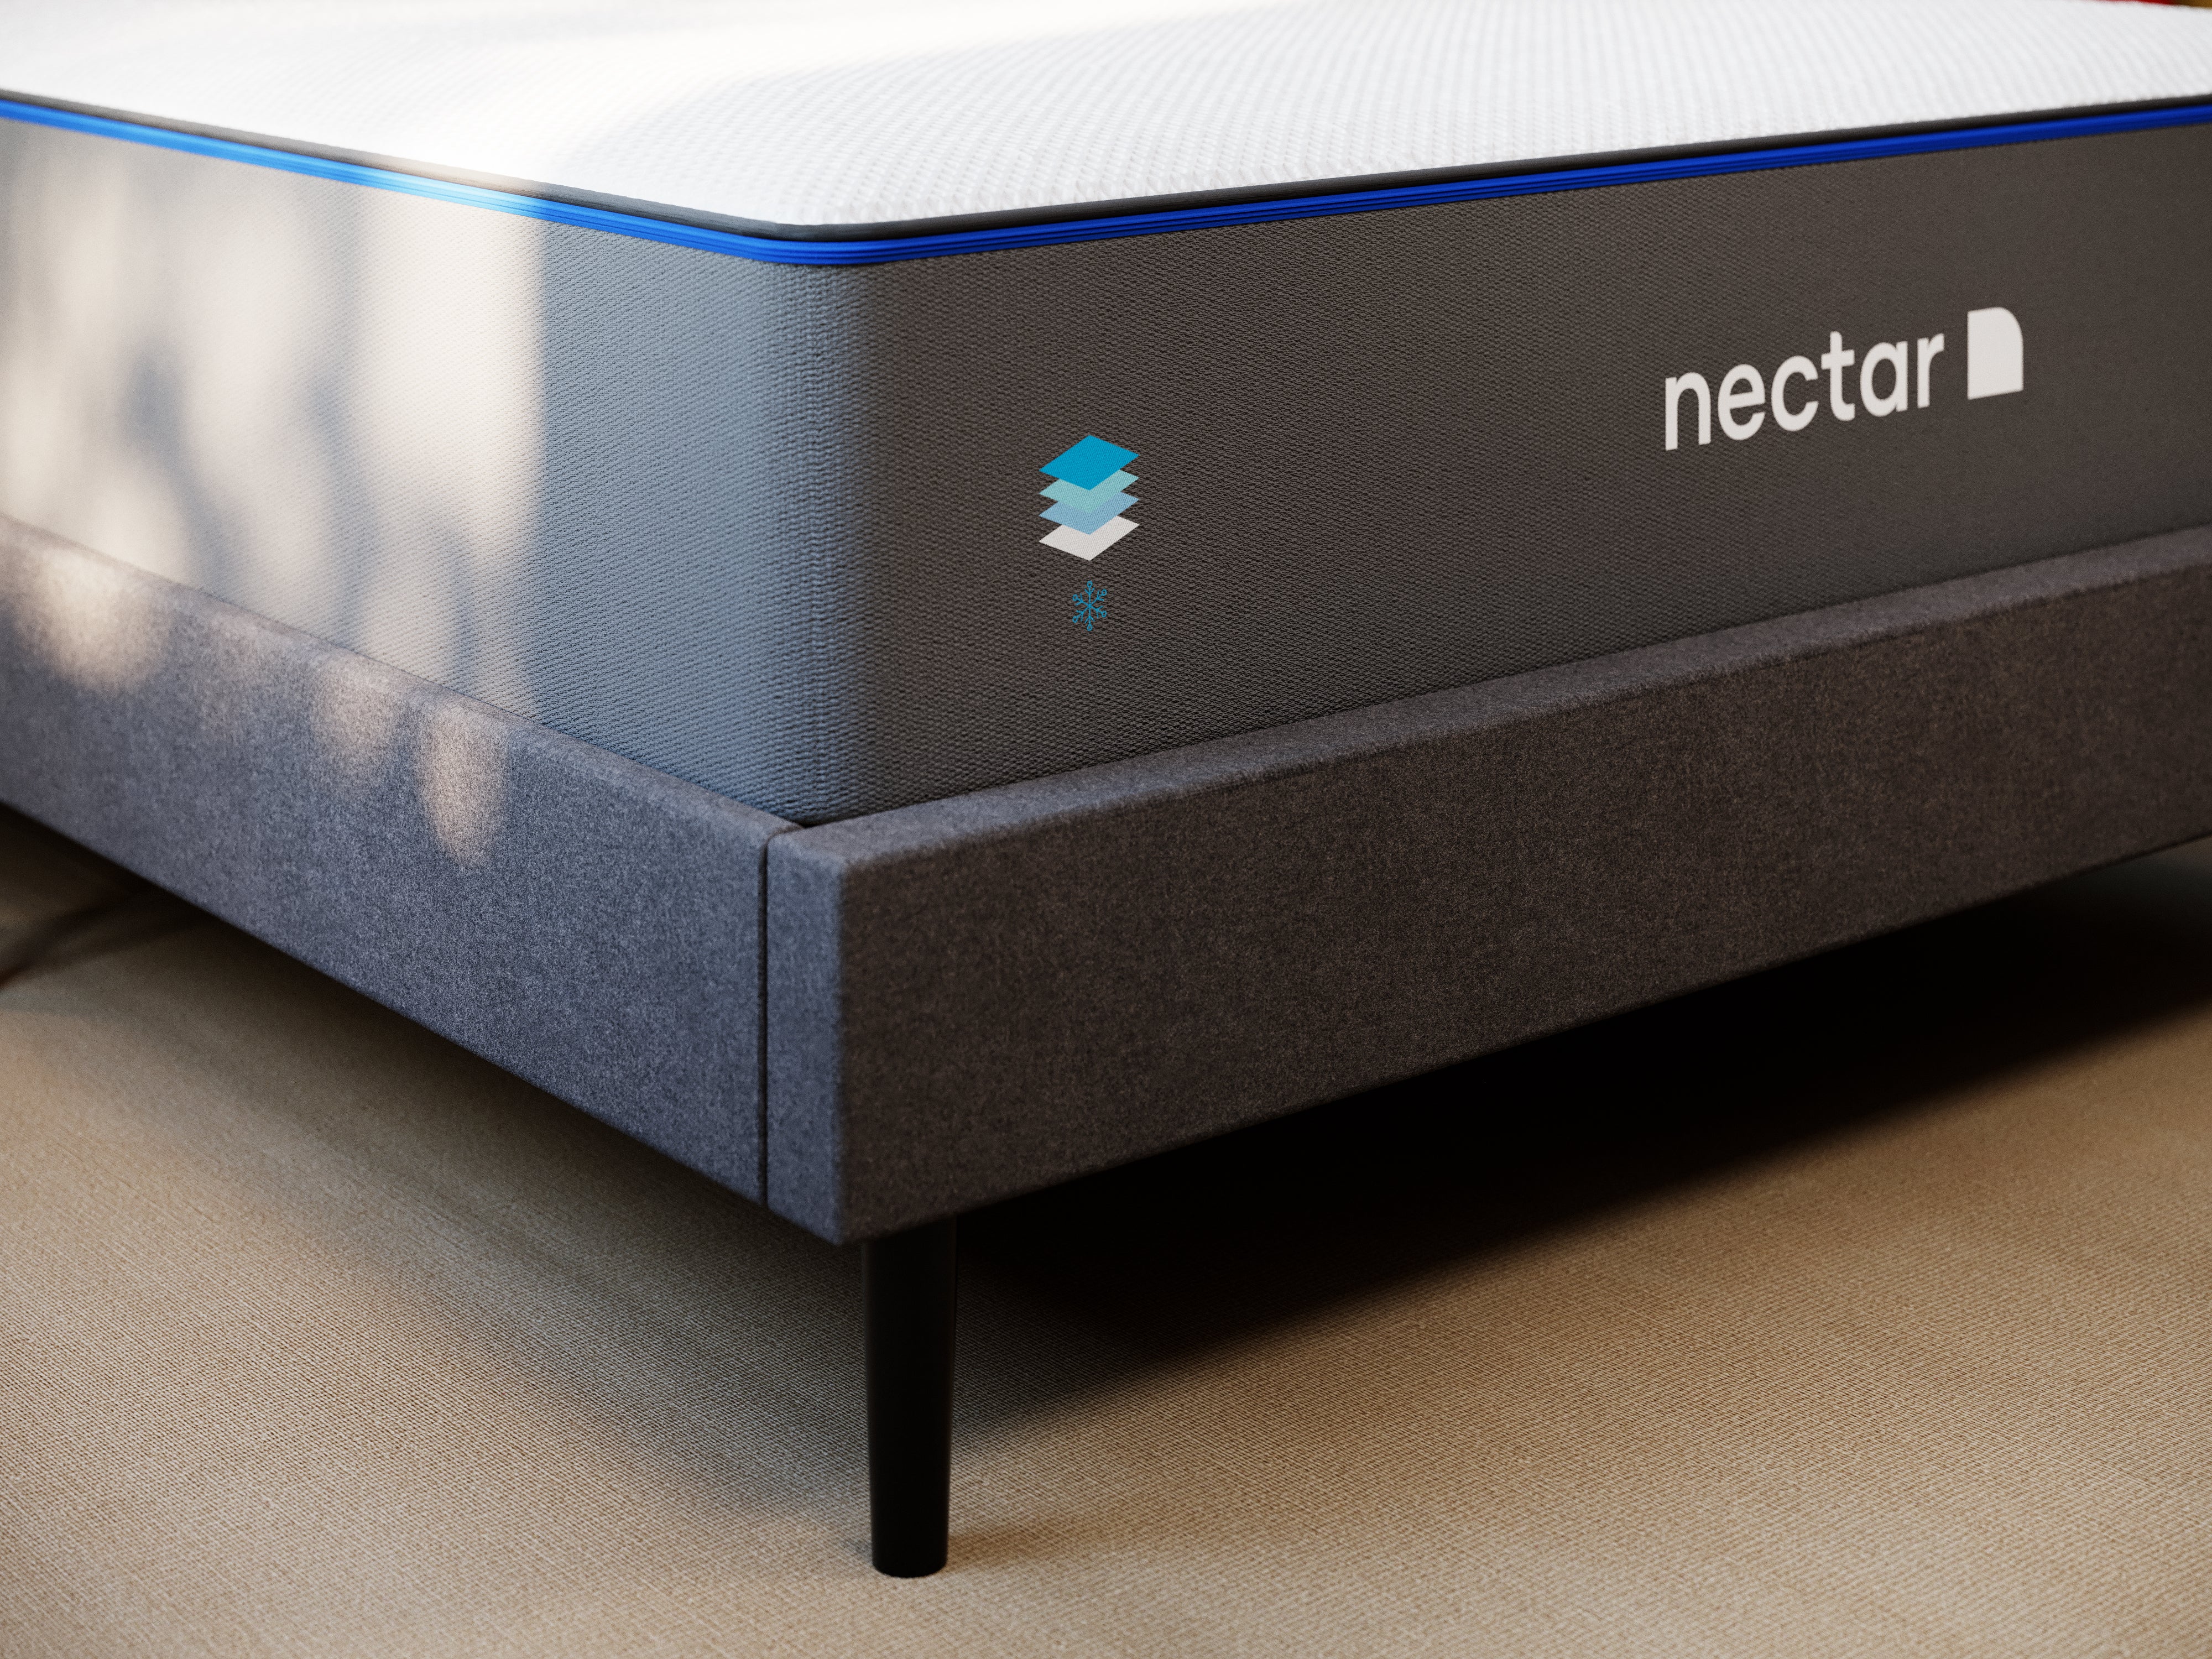 Nectar Classic 4.0 Memory Foam Mattress